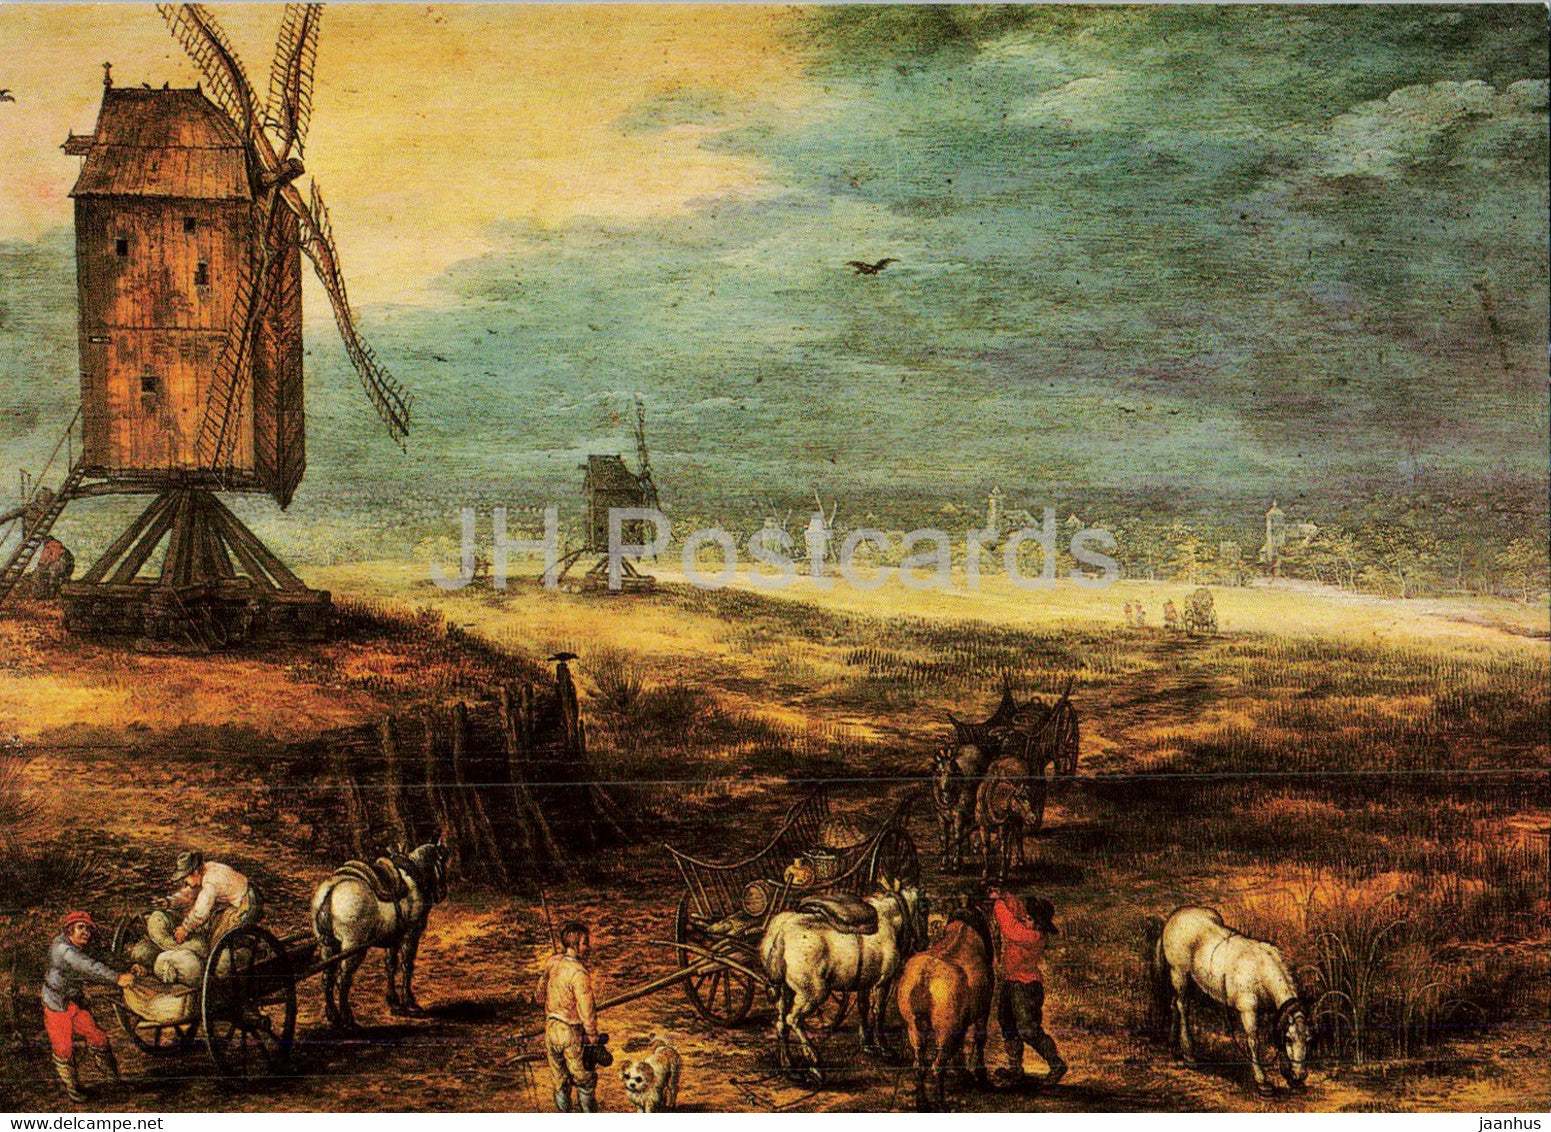 painting by Jan Brueghel the Elder - Landschaft mit Windmuhlen - windmill - horse - Flemish art - Germany - unused - JH Postcards